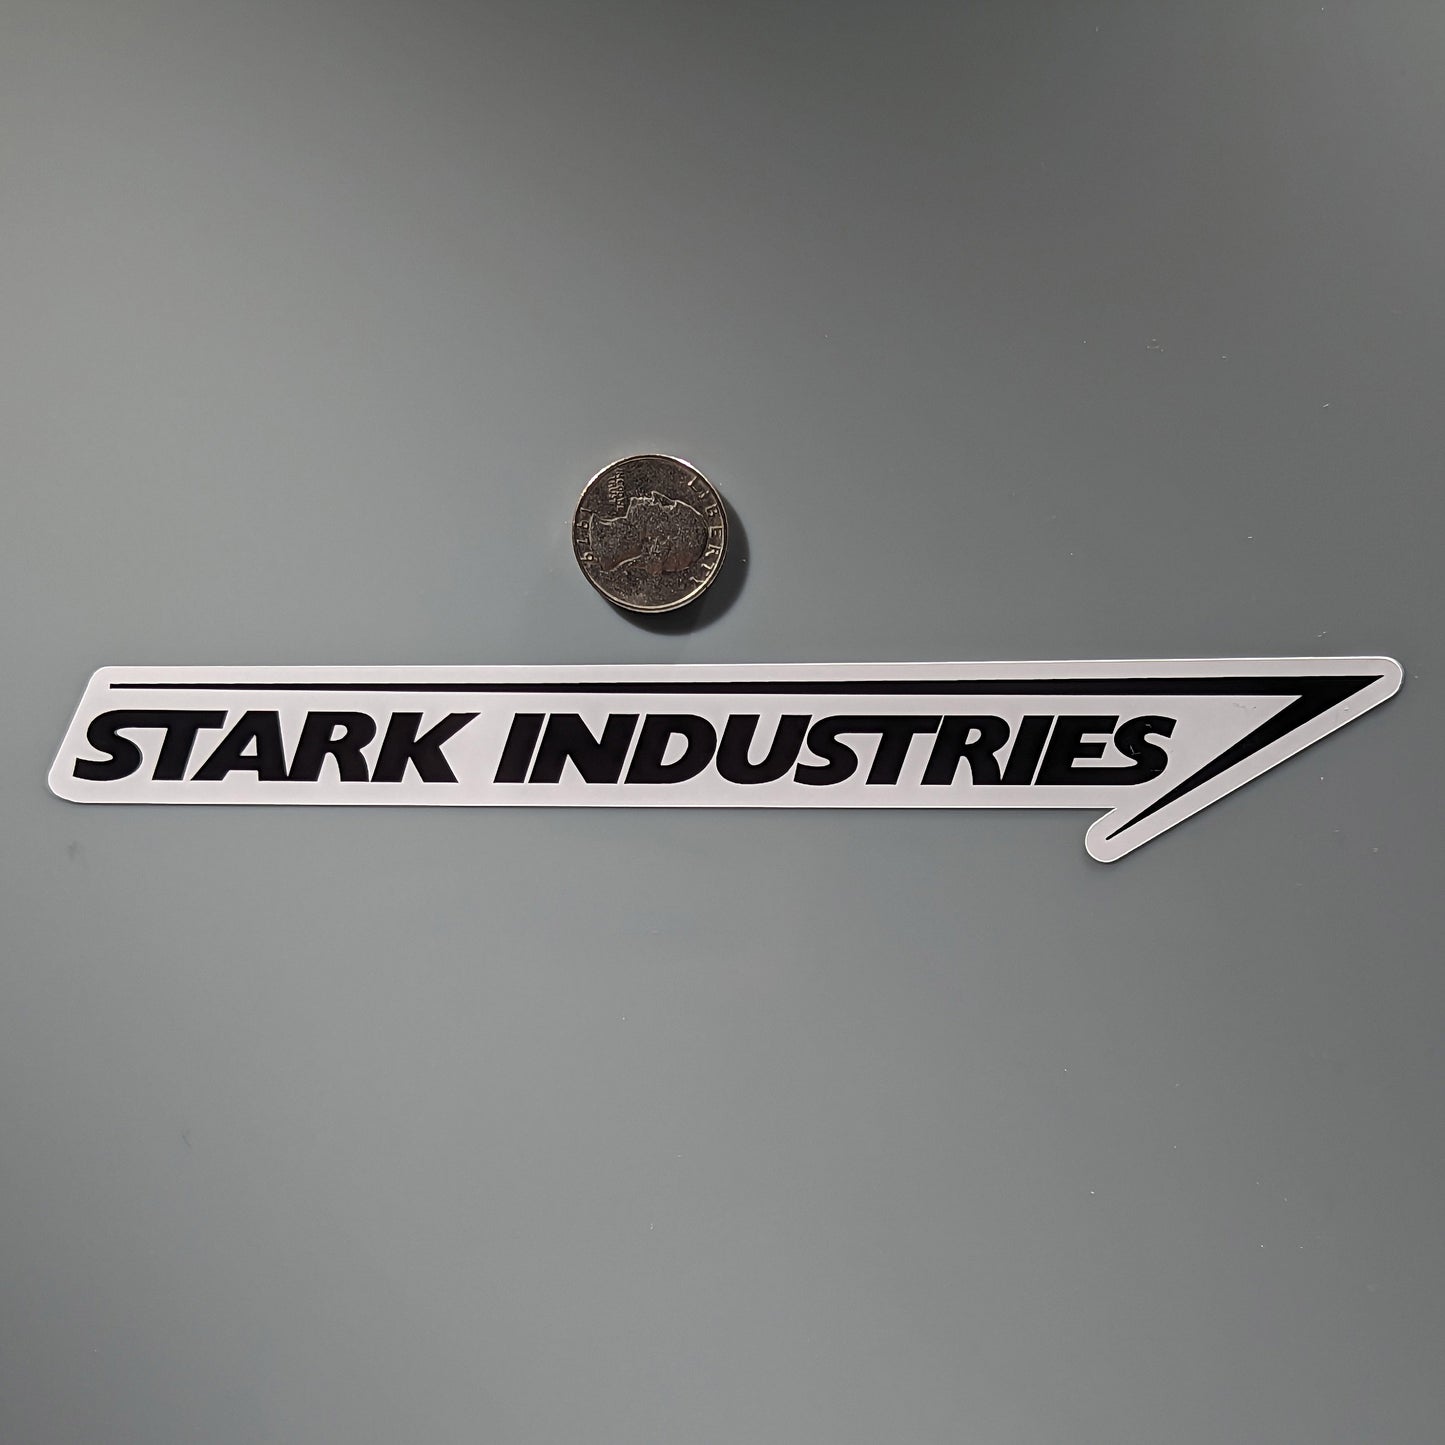 Stark Industries Decal